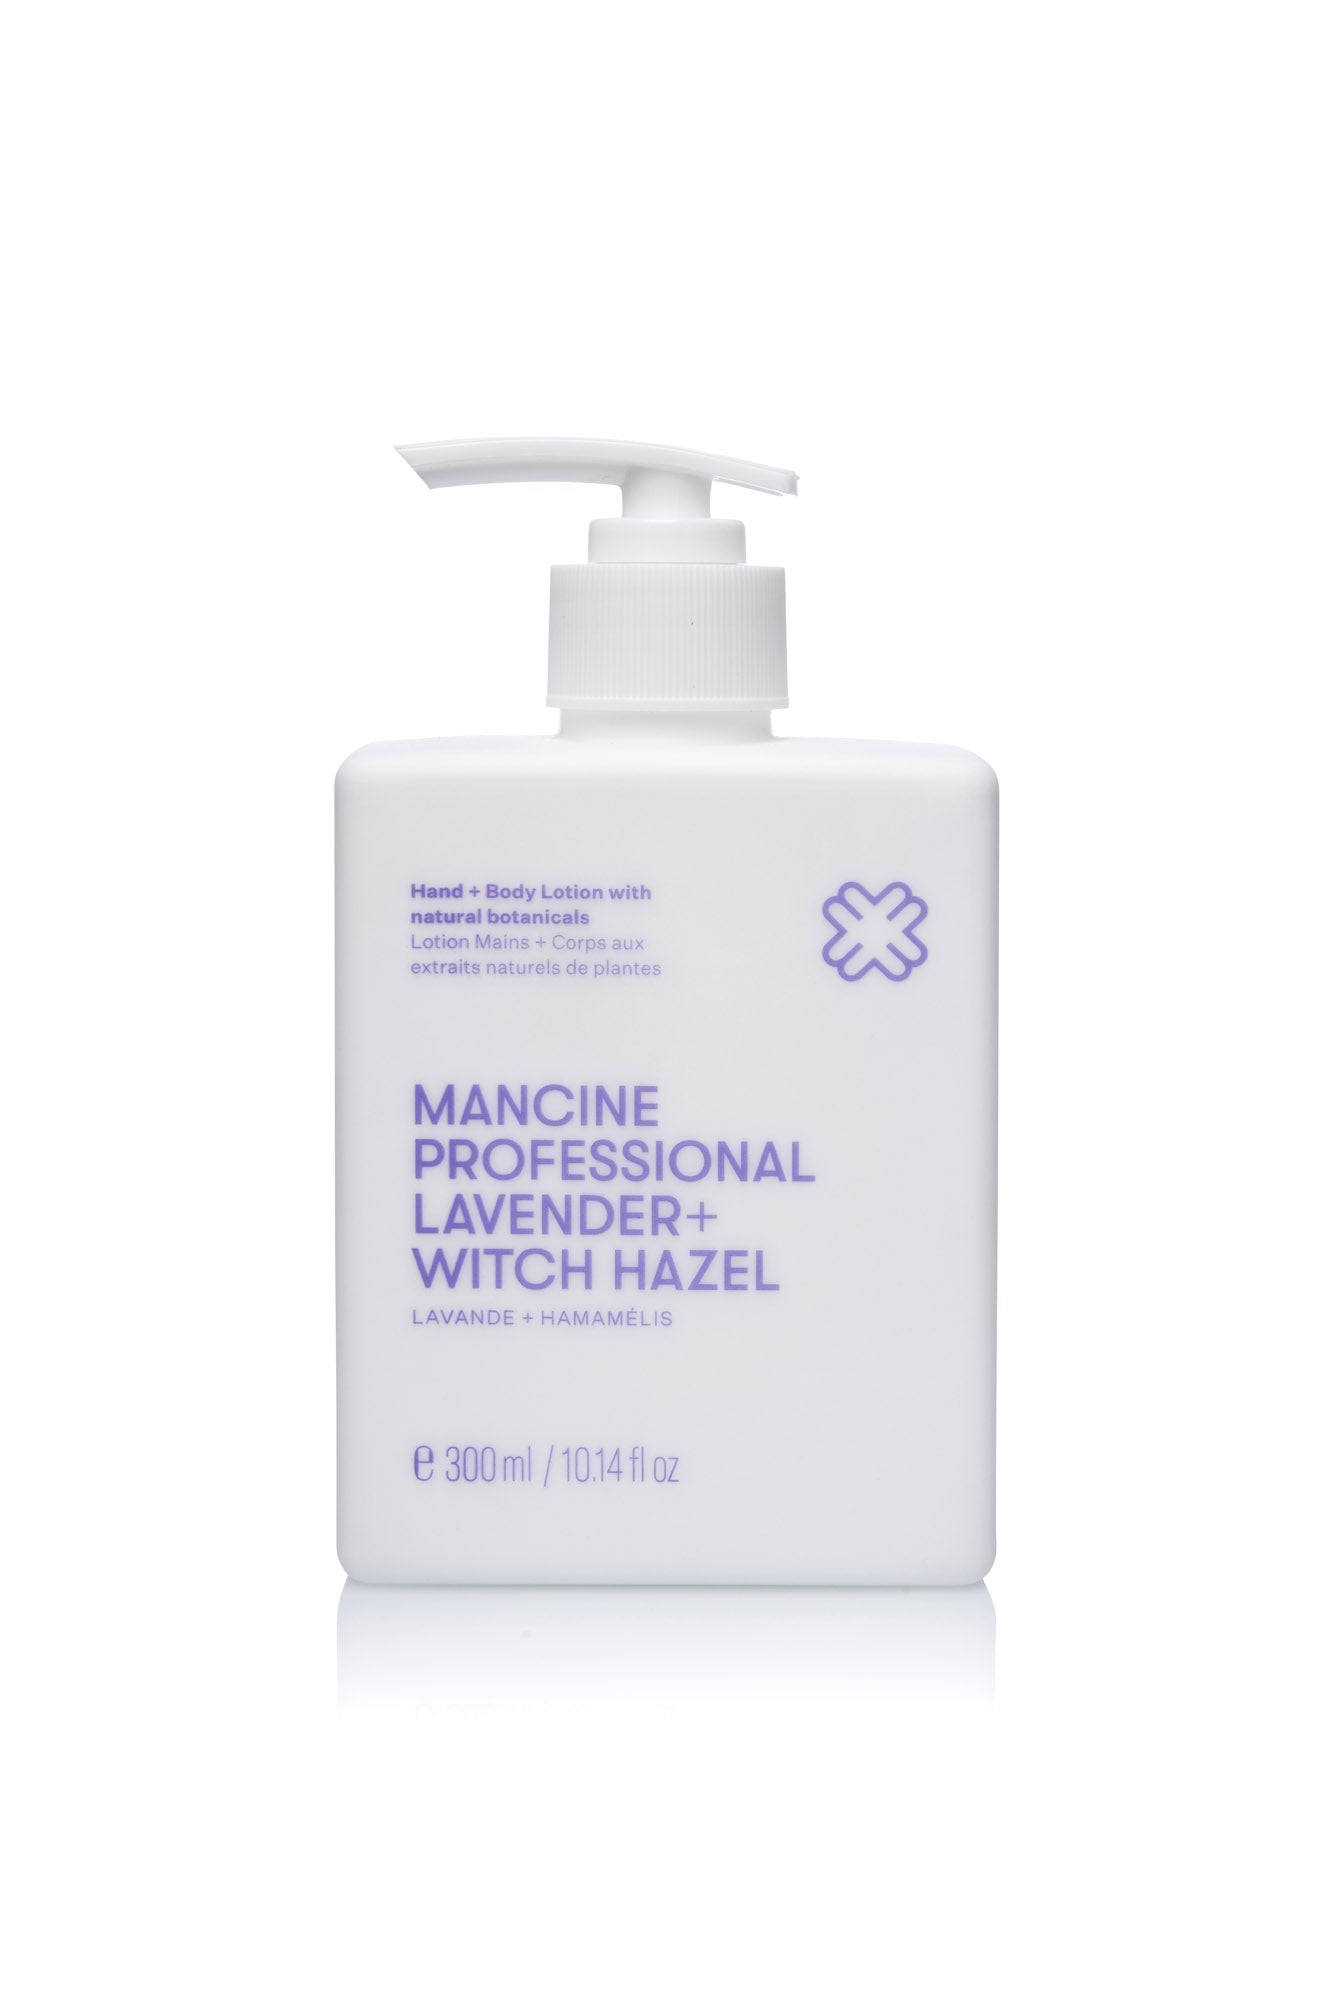 Mancine Professional Hand + Body Lotion / Lavender + Witch Hazel 300ml